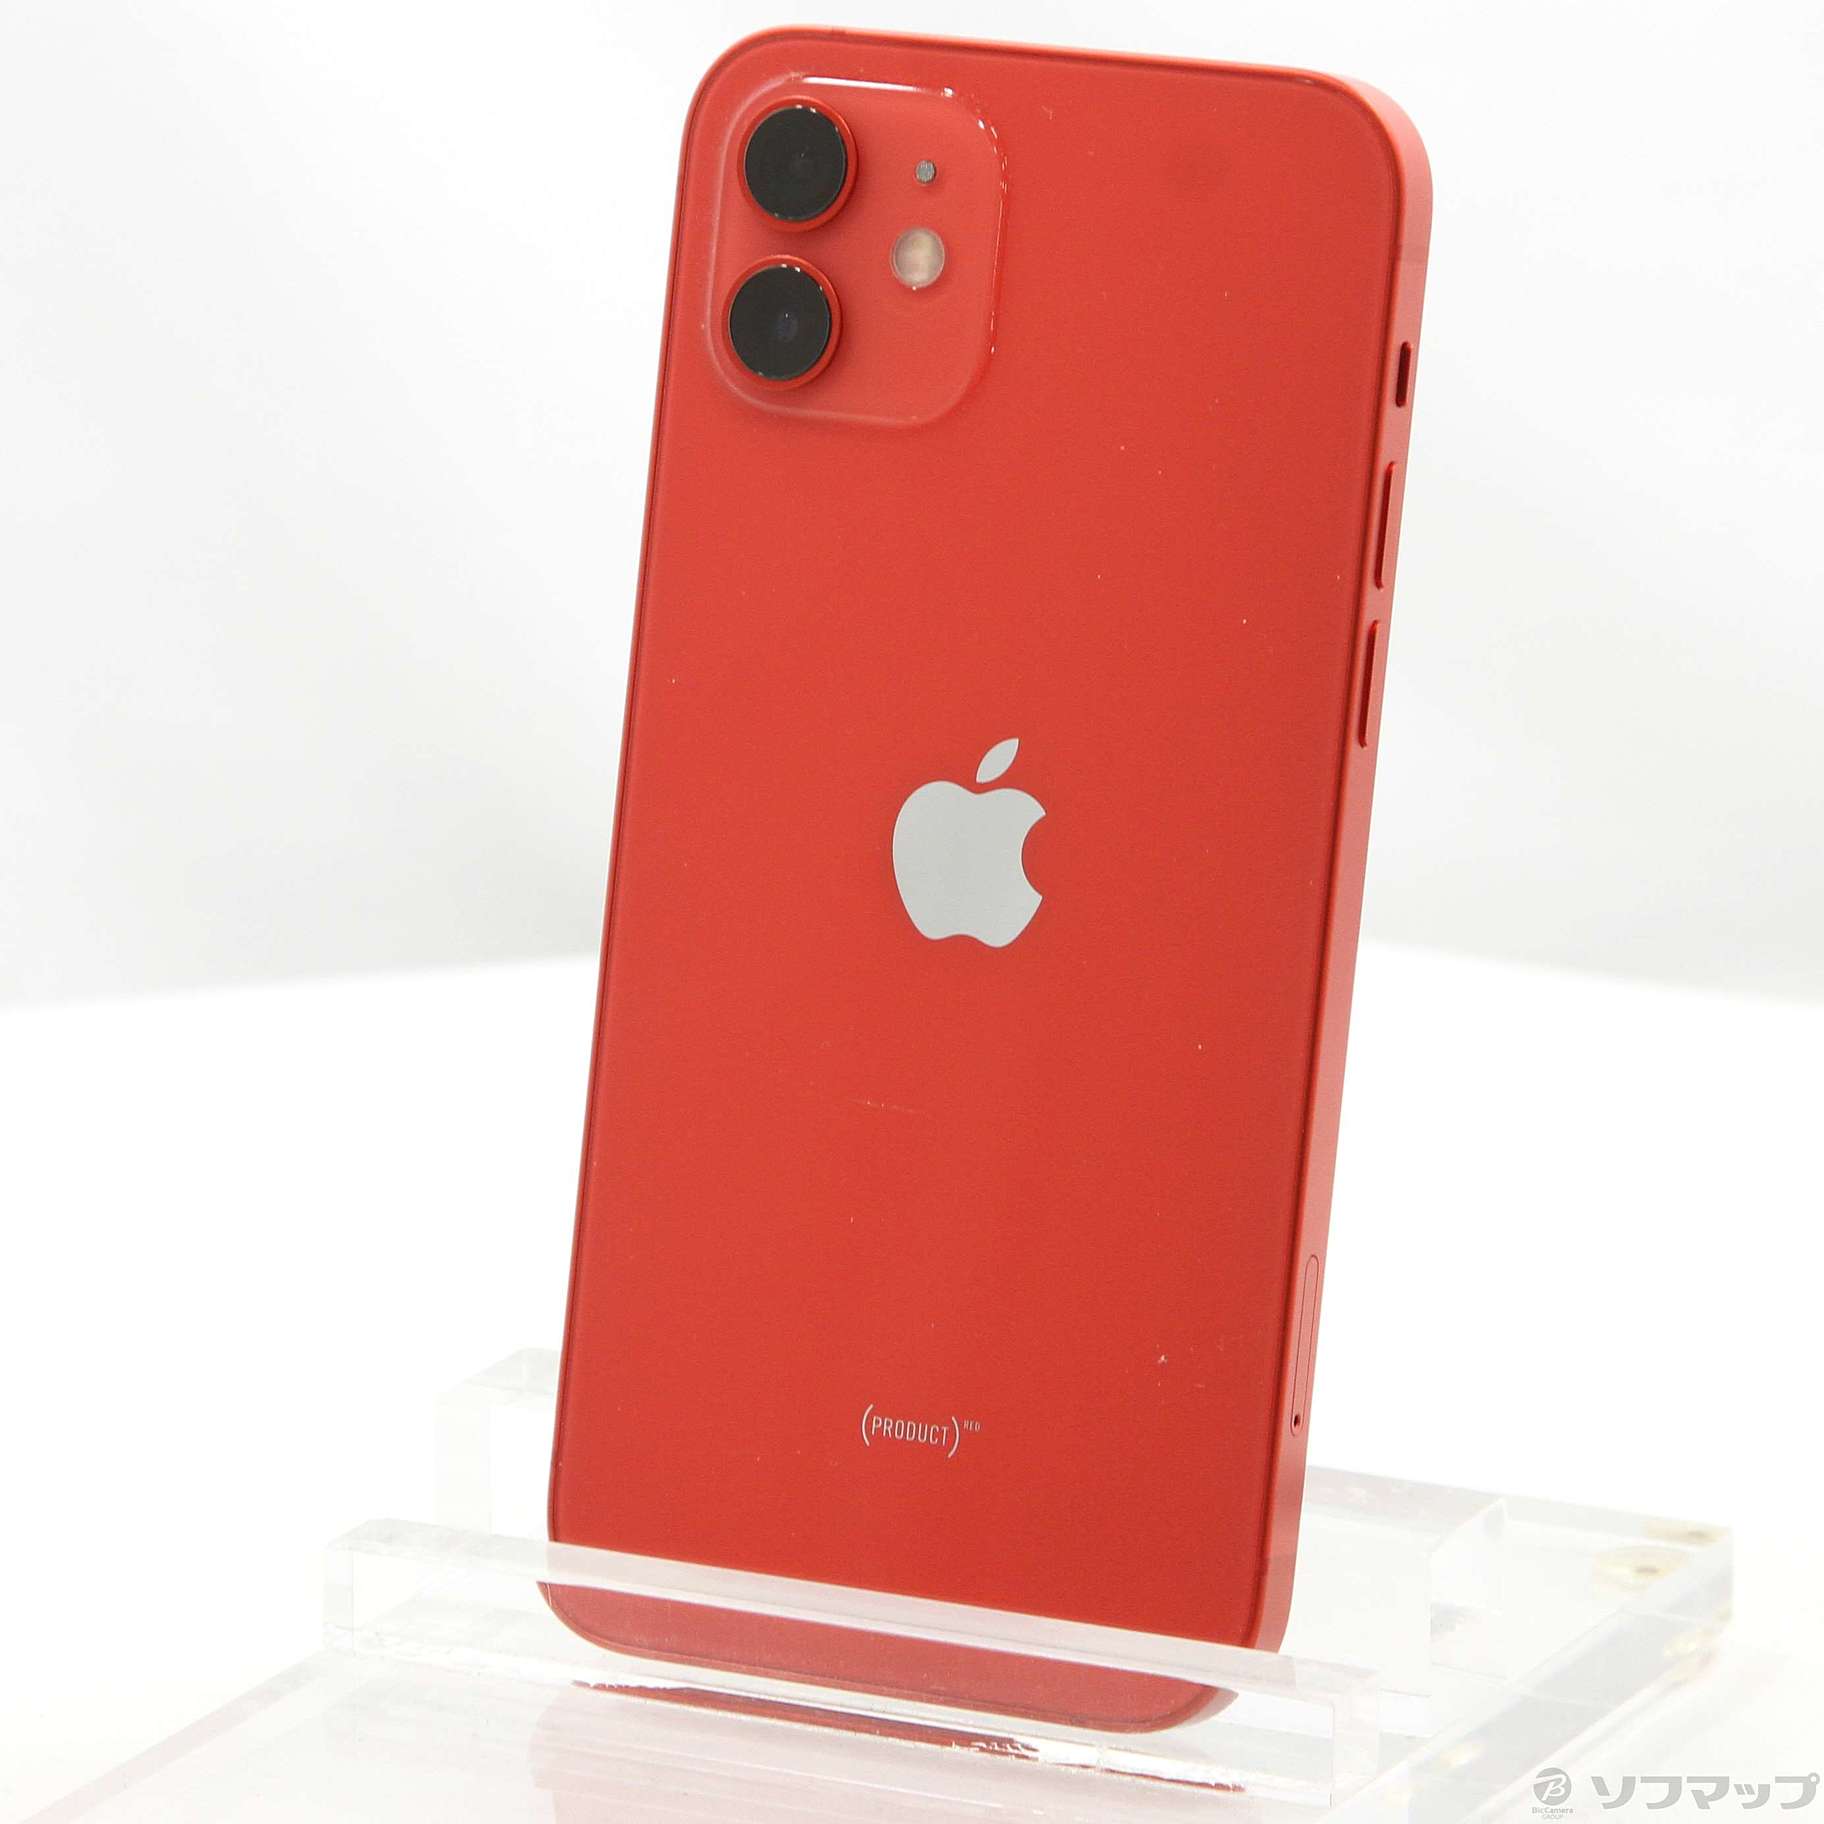 iPhone 12 (PRODUCT)RED 256GB SIMフリー [レッド] 中古(白ロム)価格 